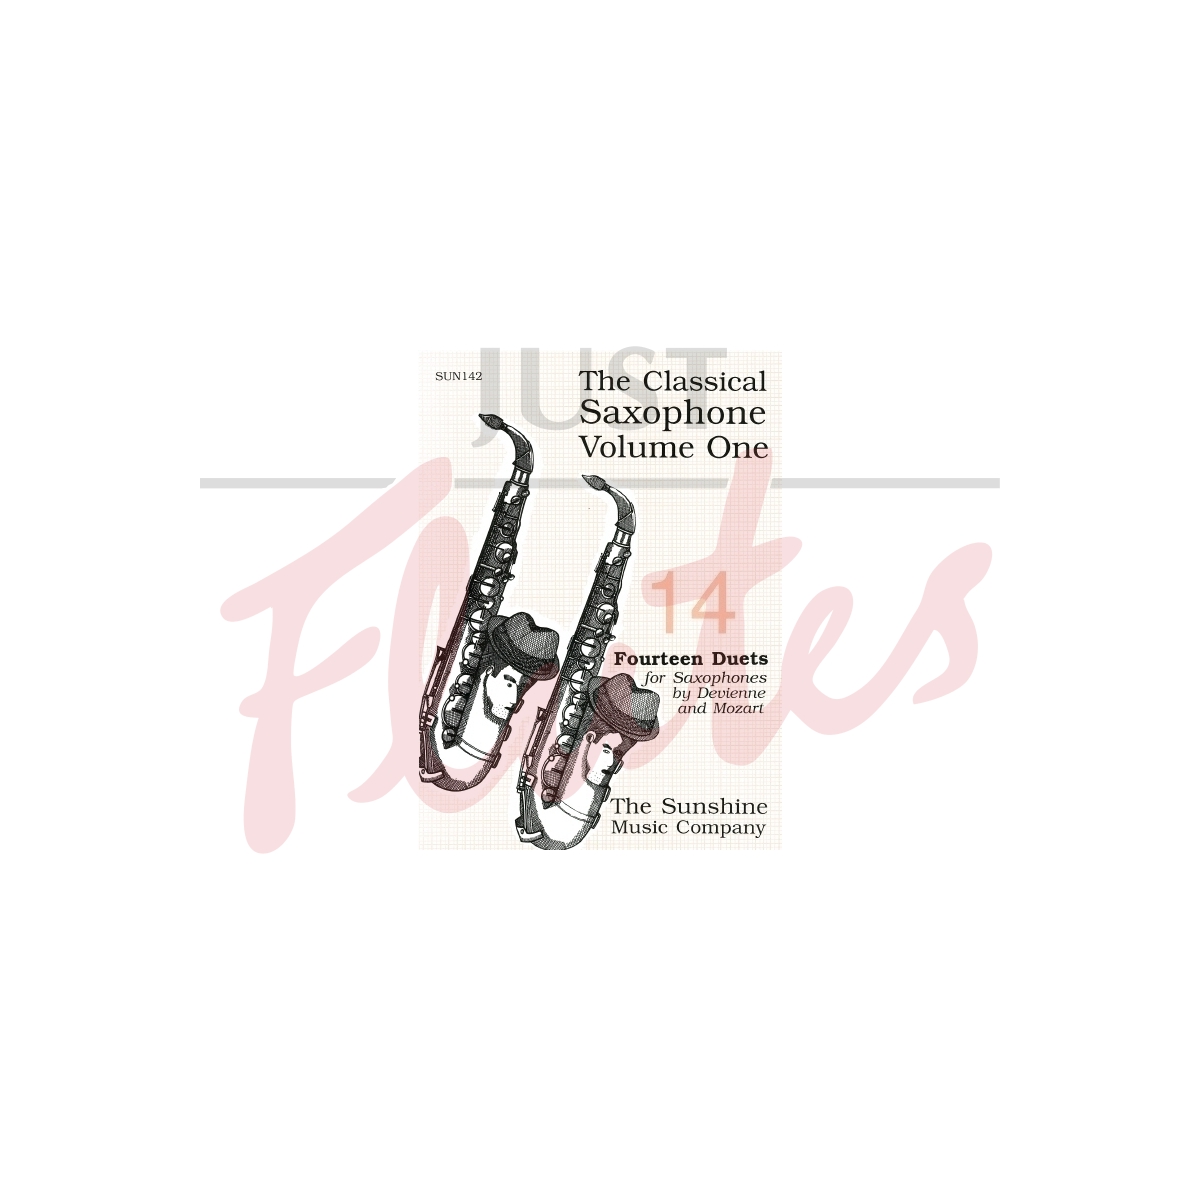 The Classical Saxophone Vol 1